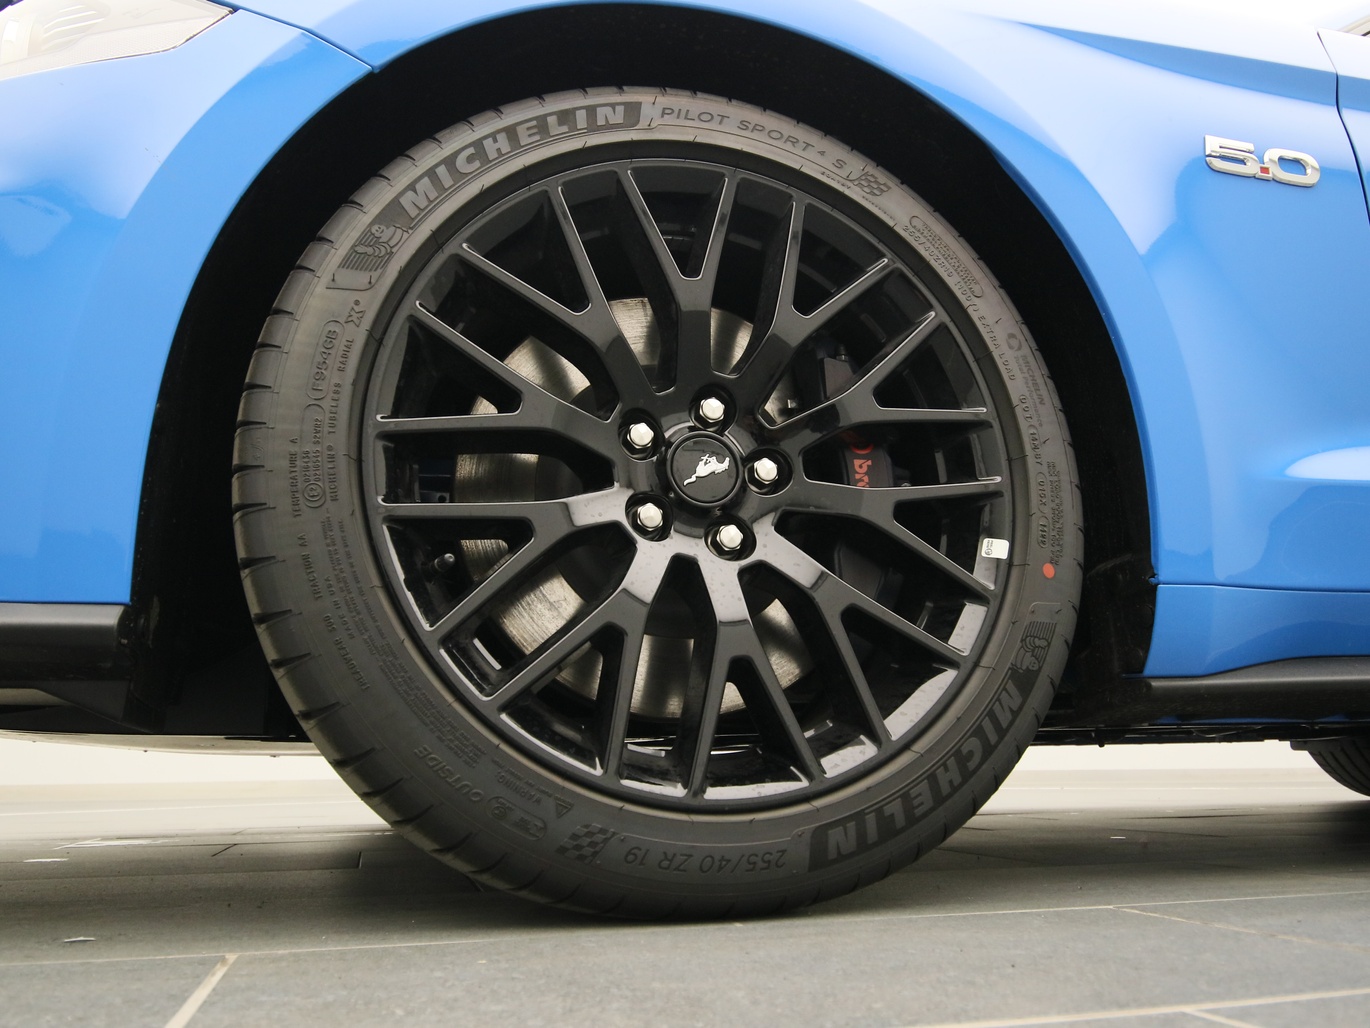  Ford Mustang GT Coupé V8 450PS / Premium 2 / B&O in Grabber Blue 